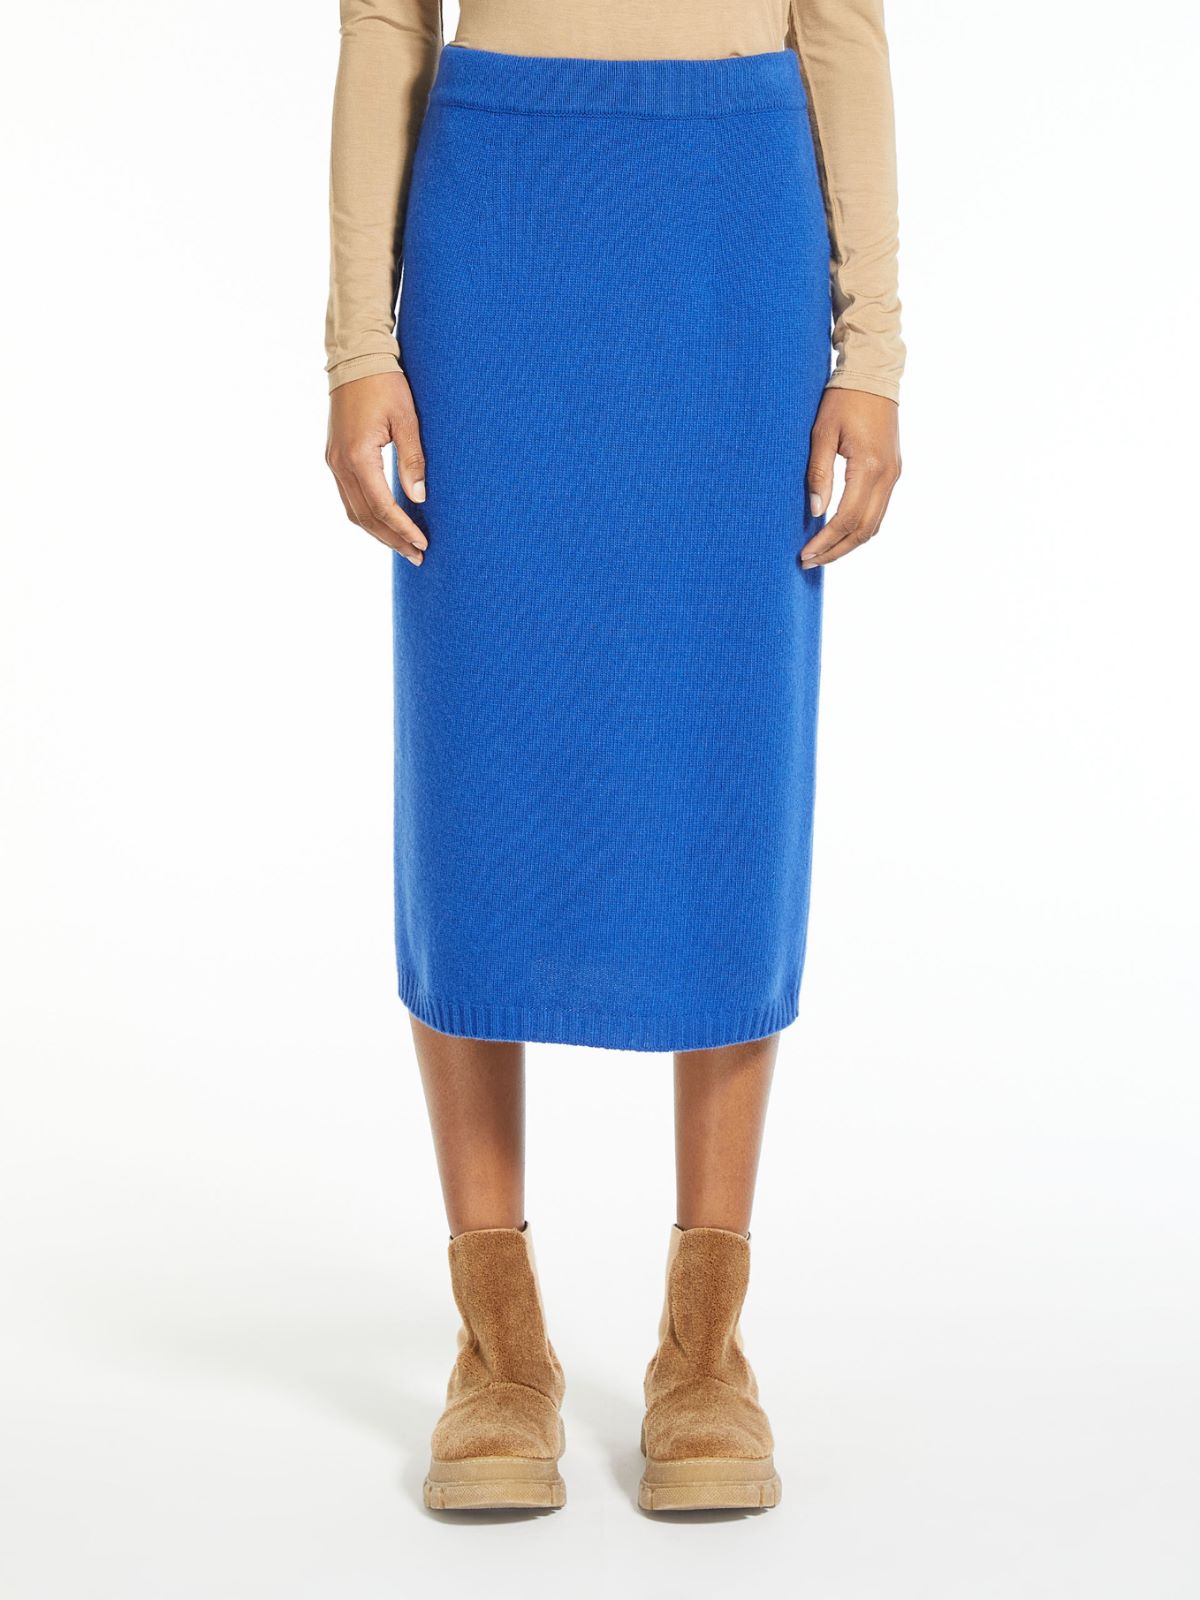 Wool yarn skirt - CORNFLOWER BLUE - Weekend Max Mara - 2